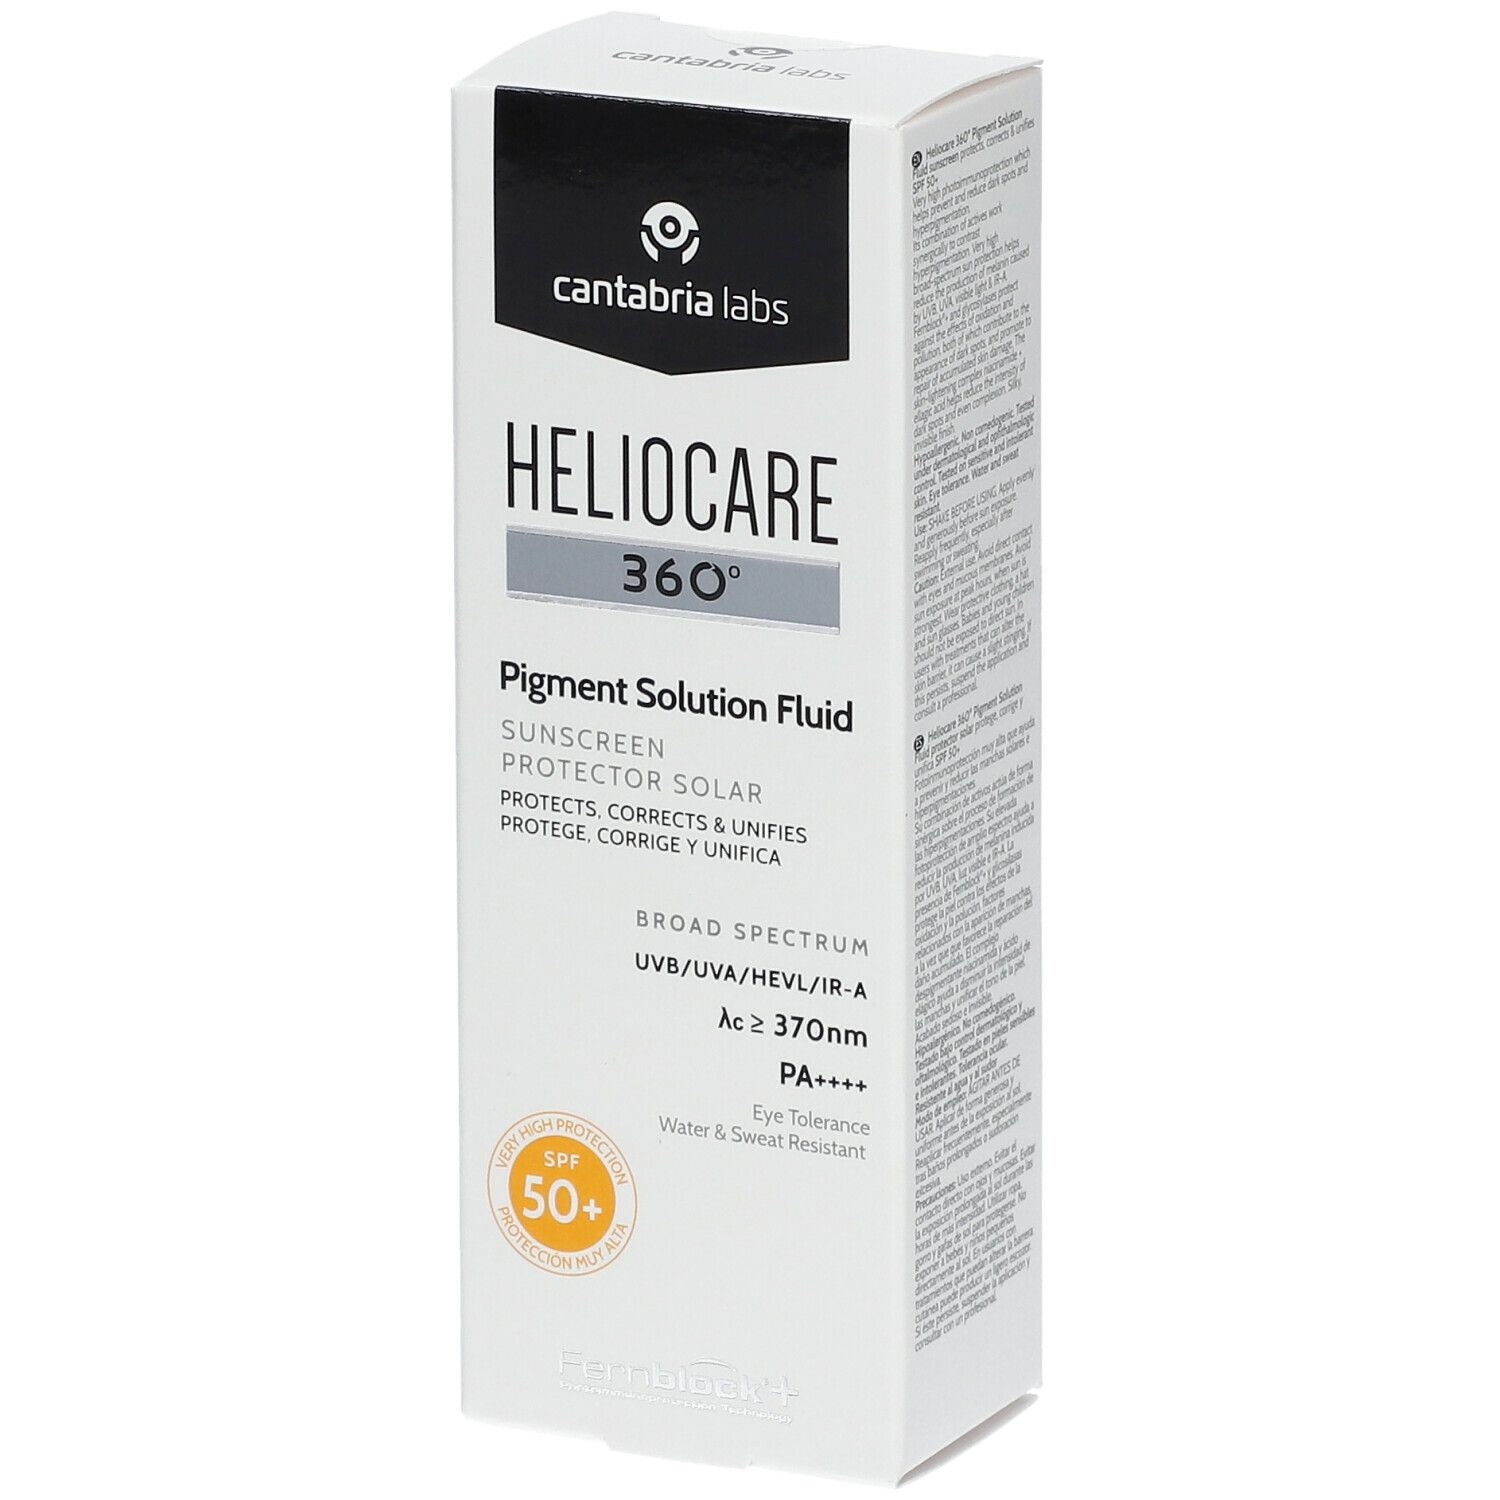 HELIOCARE®  360° Pigment Solution Fluid